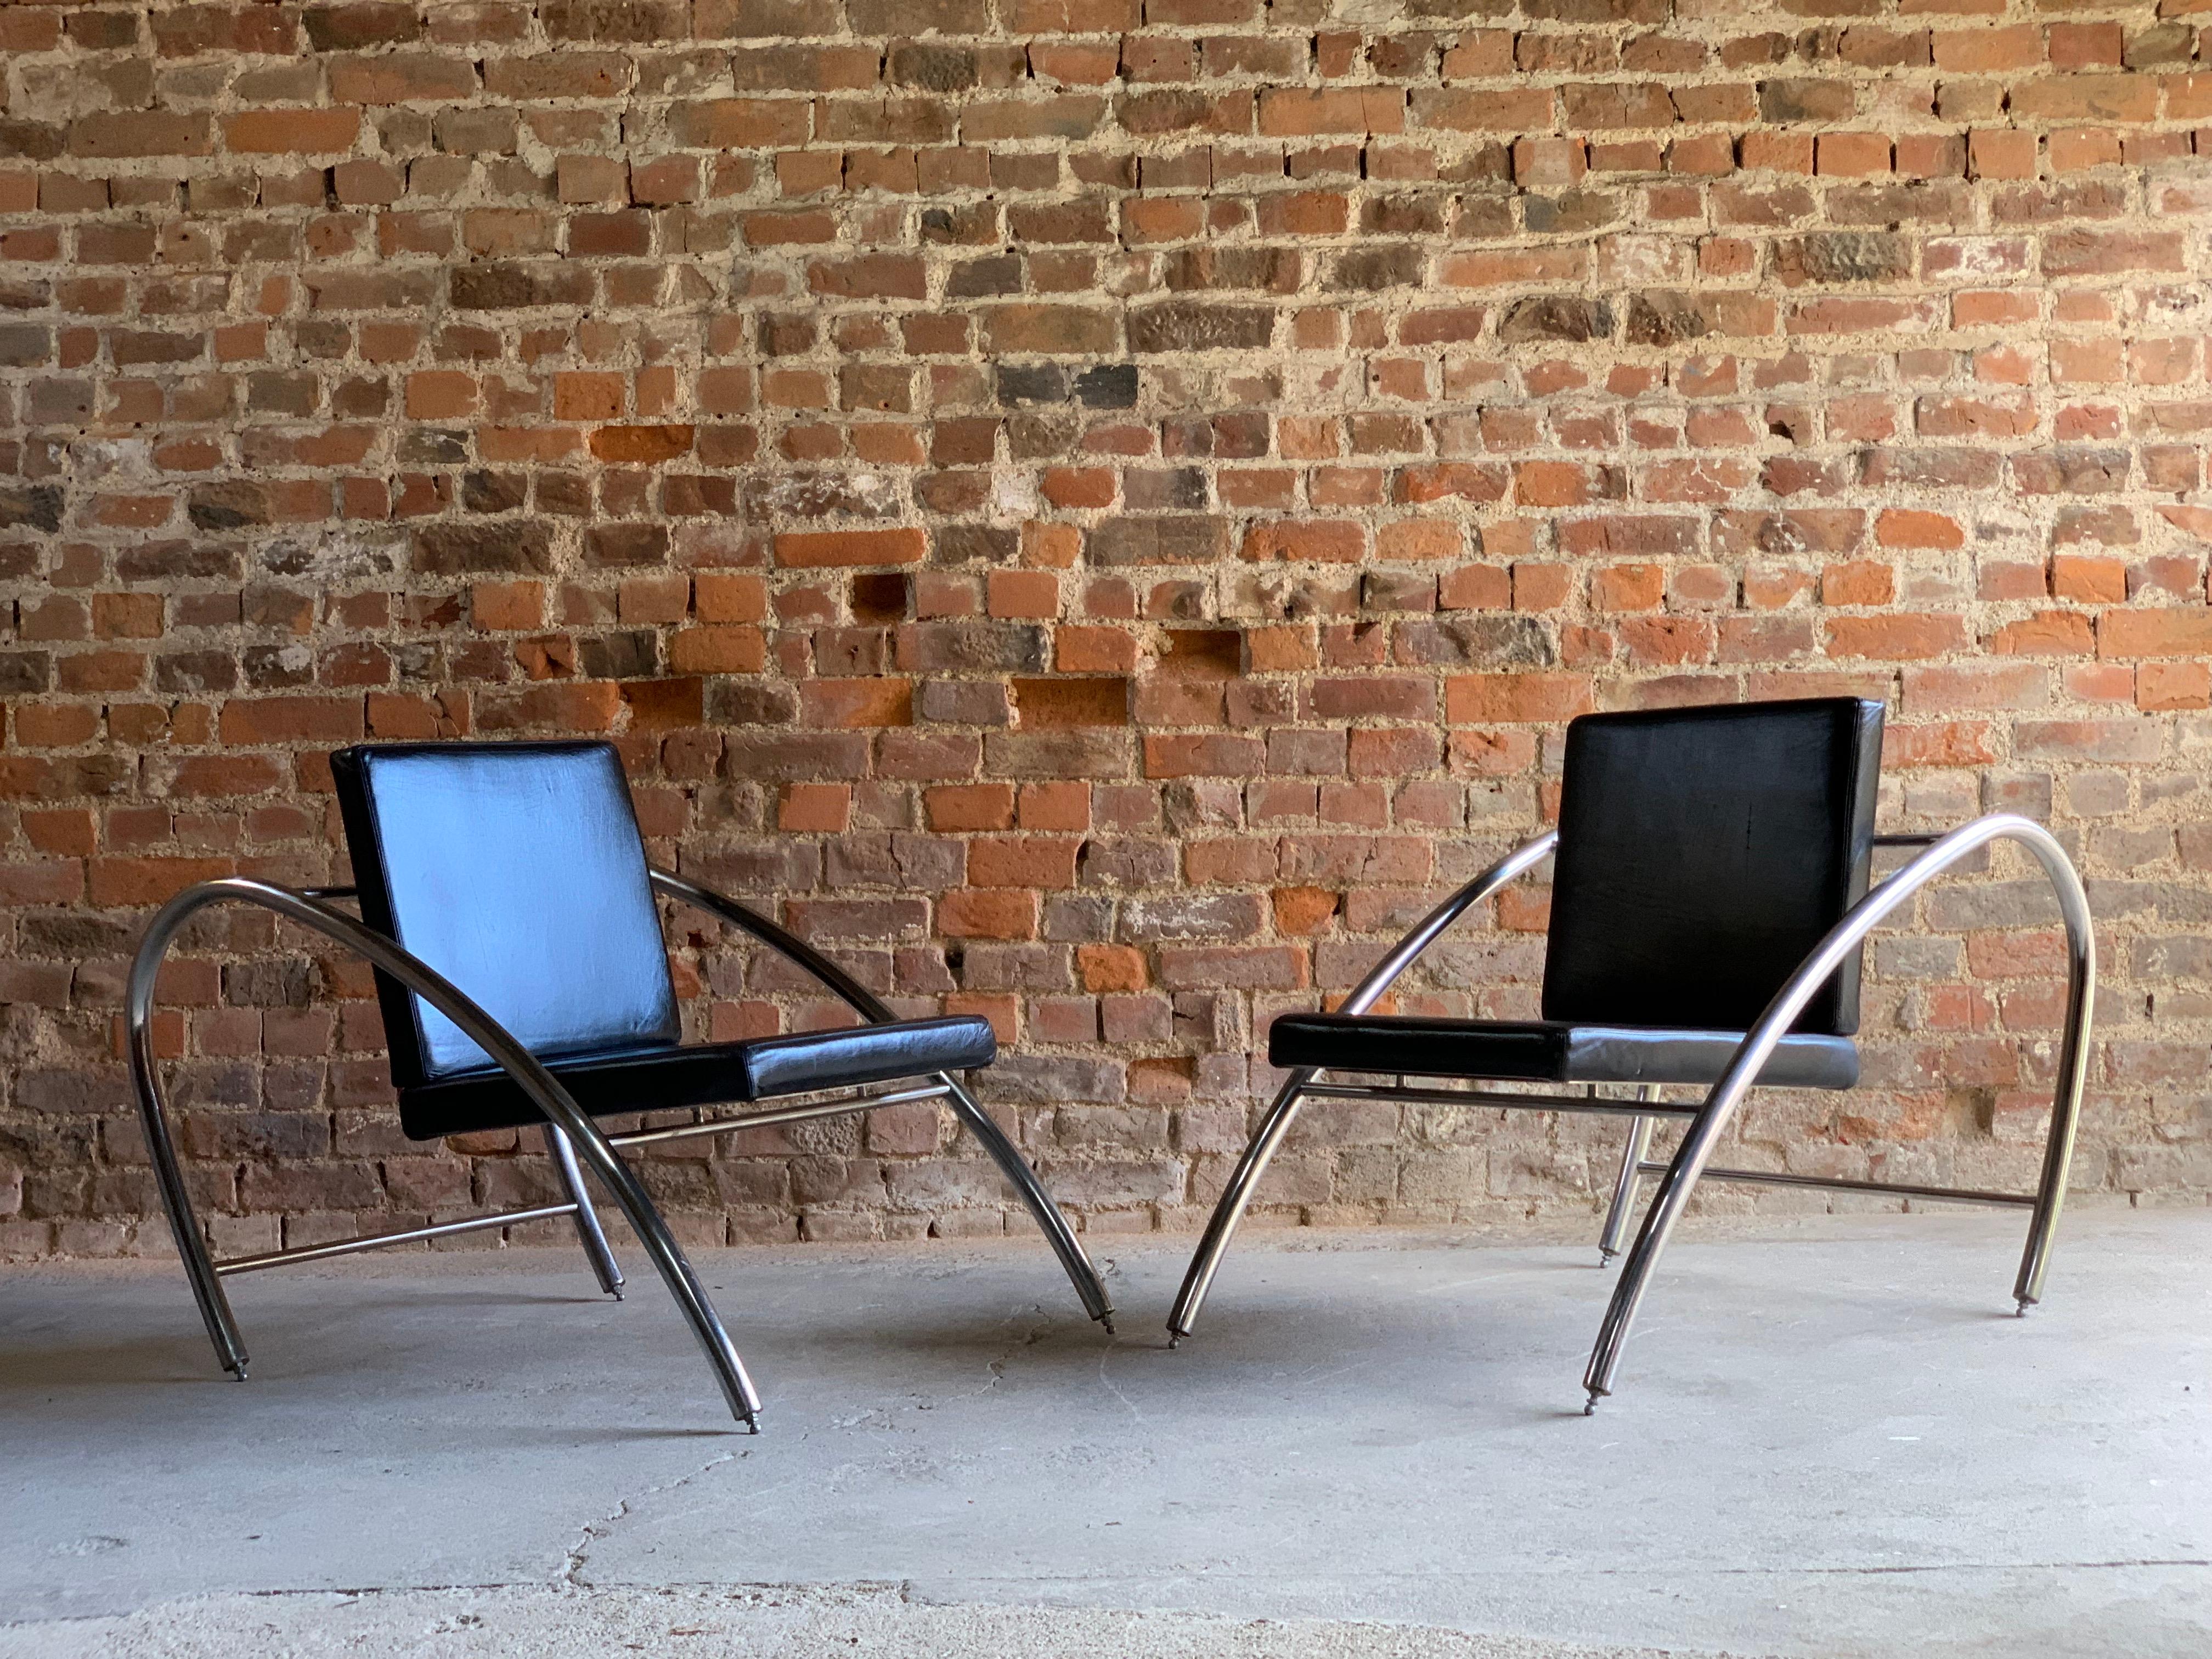 Italian Moreno Chrome & Leather Lounge Chairs by Francois Scali & Alain Domingo for Nemo